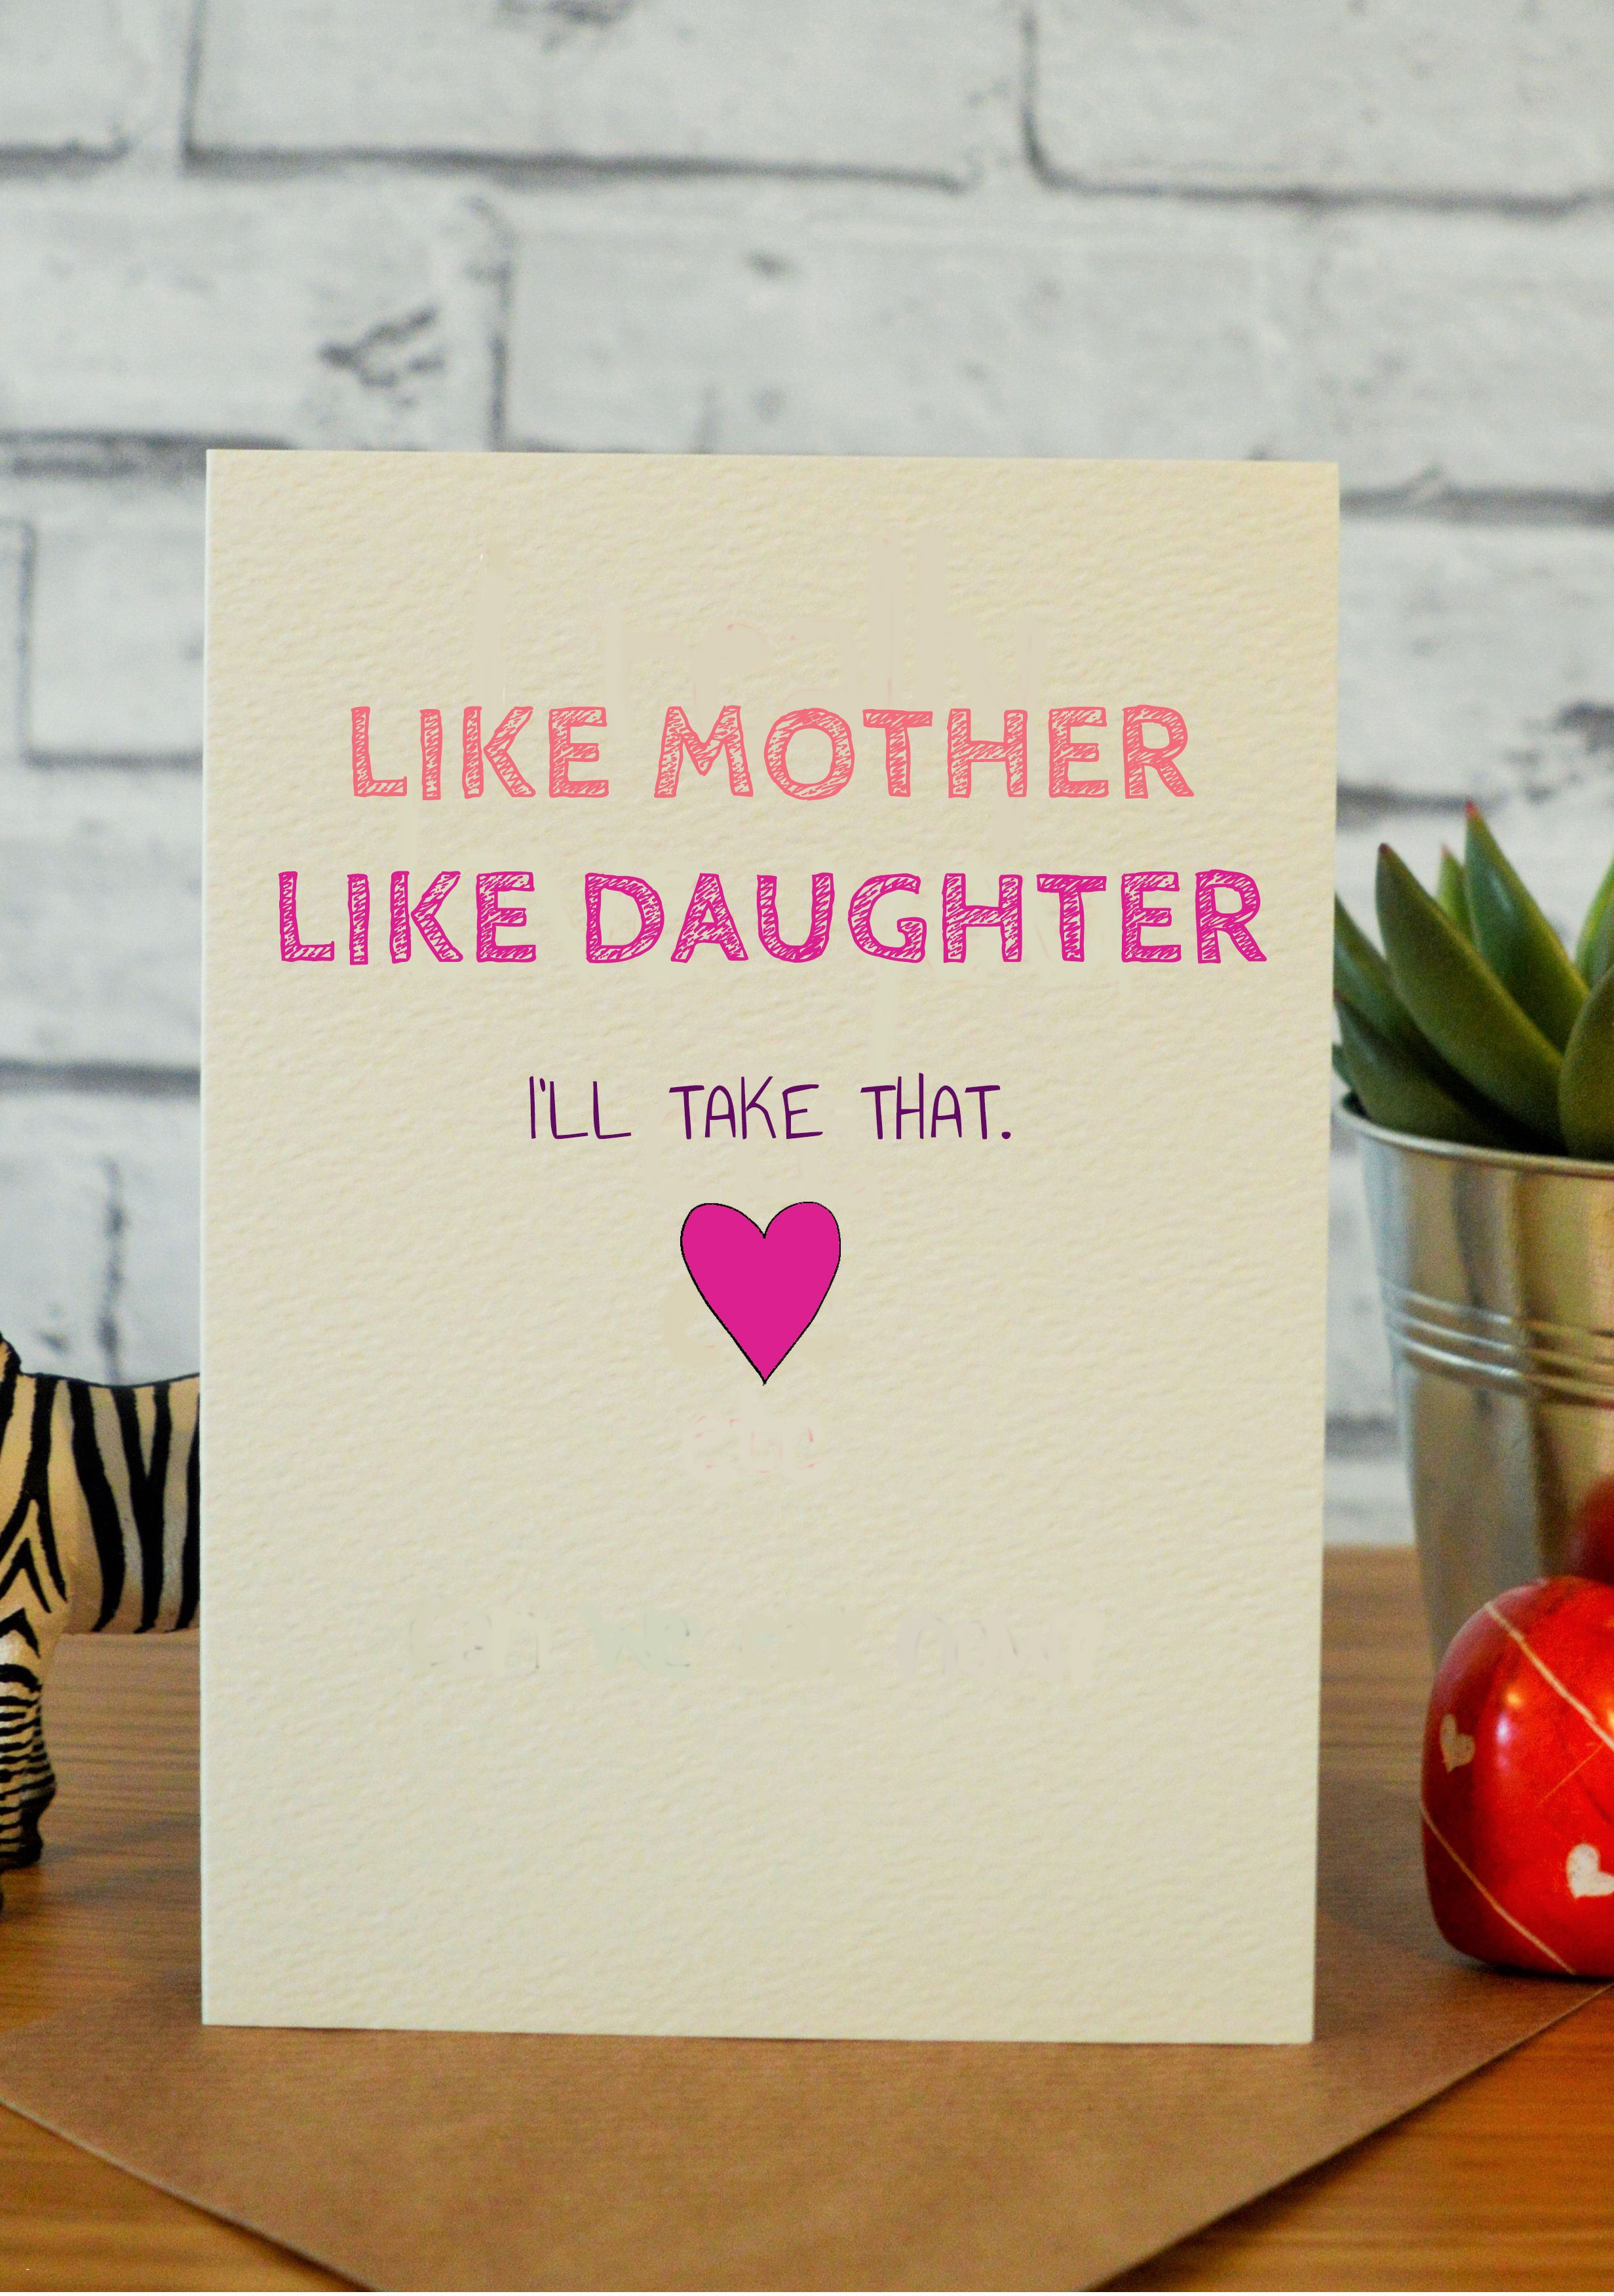 Cool Card Ideas For Birthdays Homemade Card Ideas For Mom Birthday Flisol Home